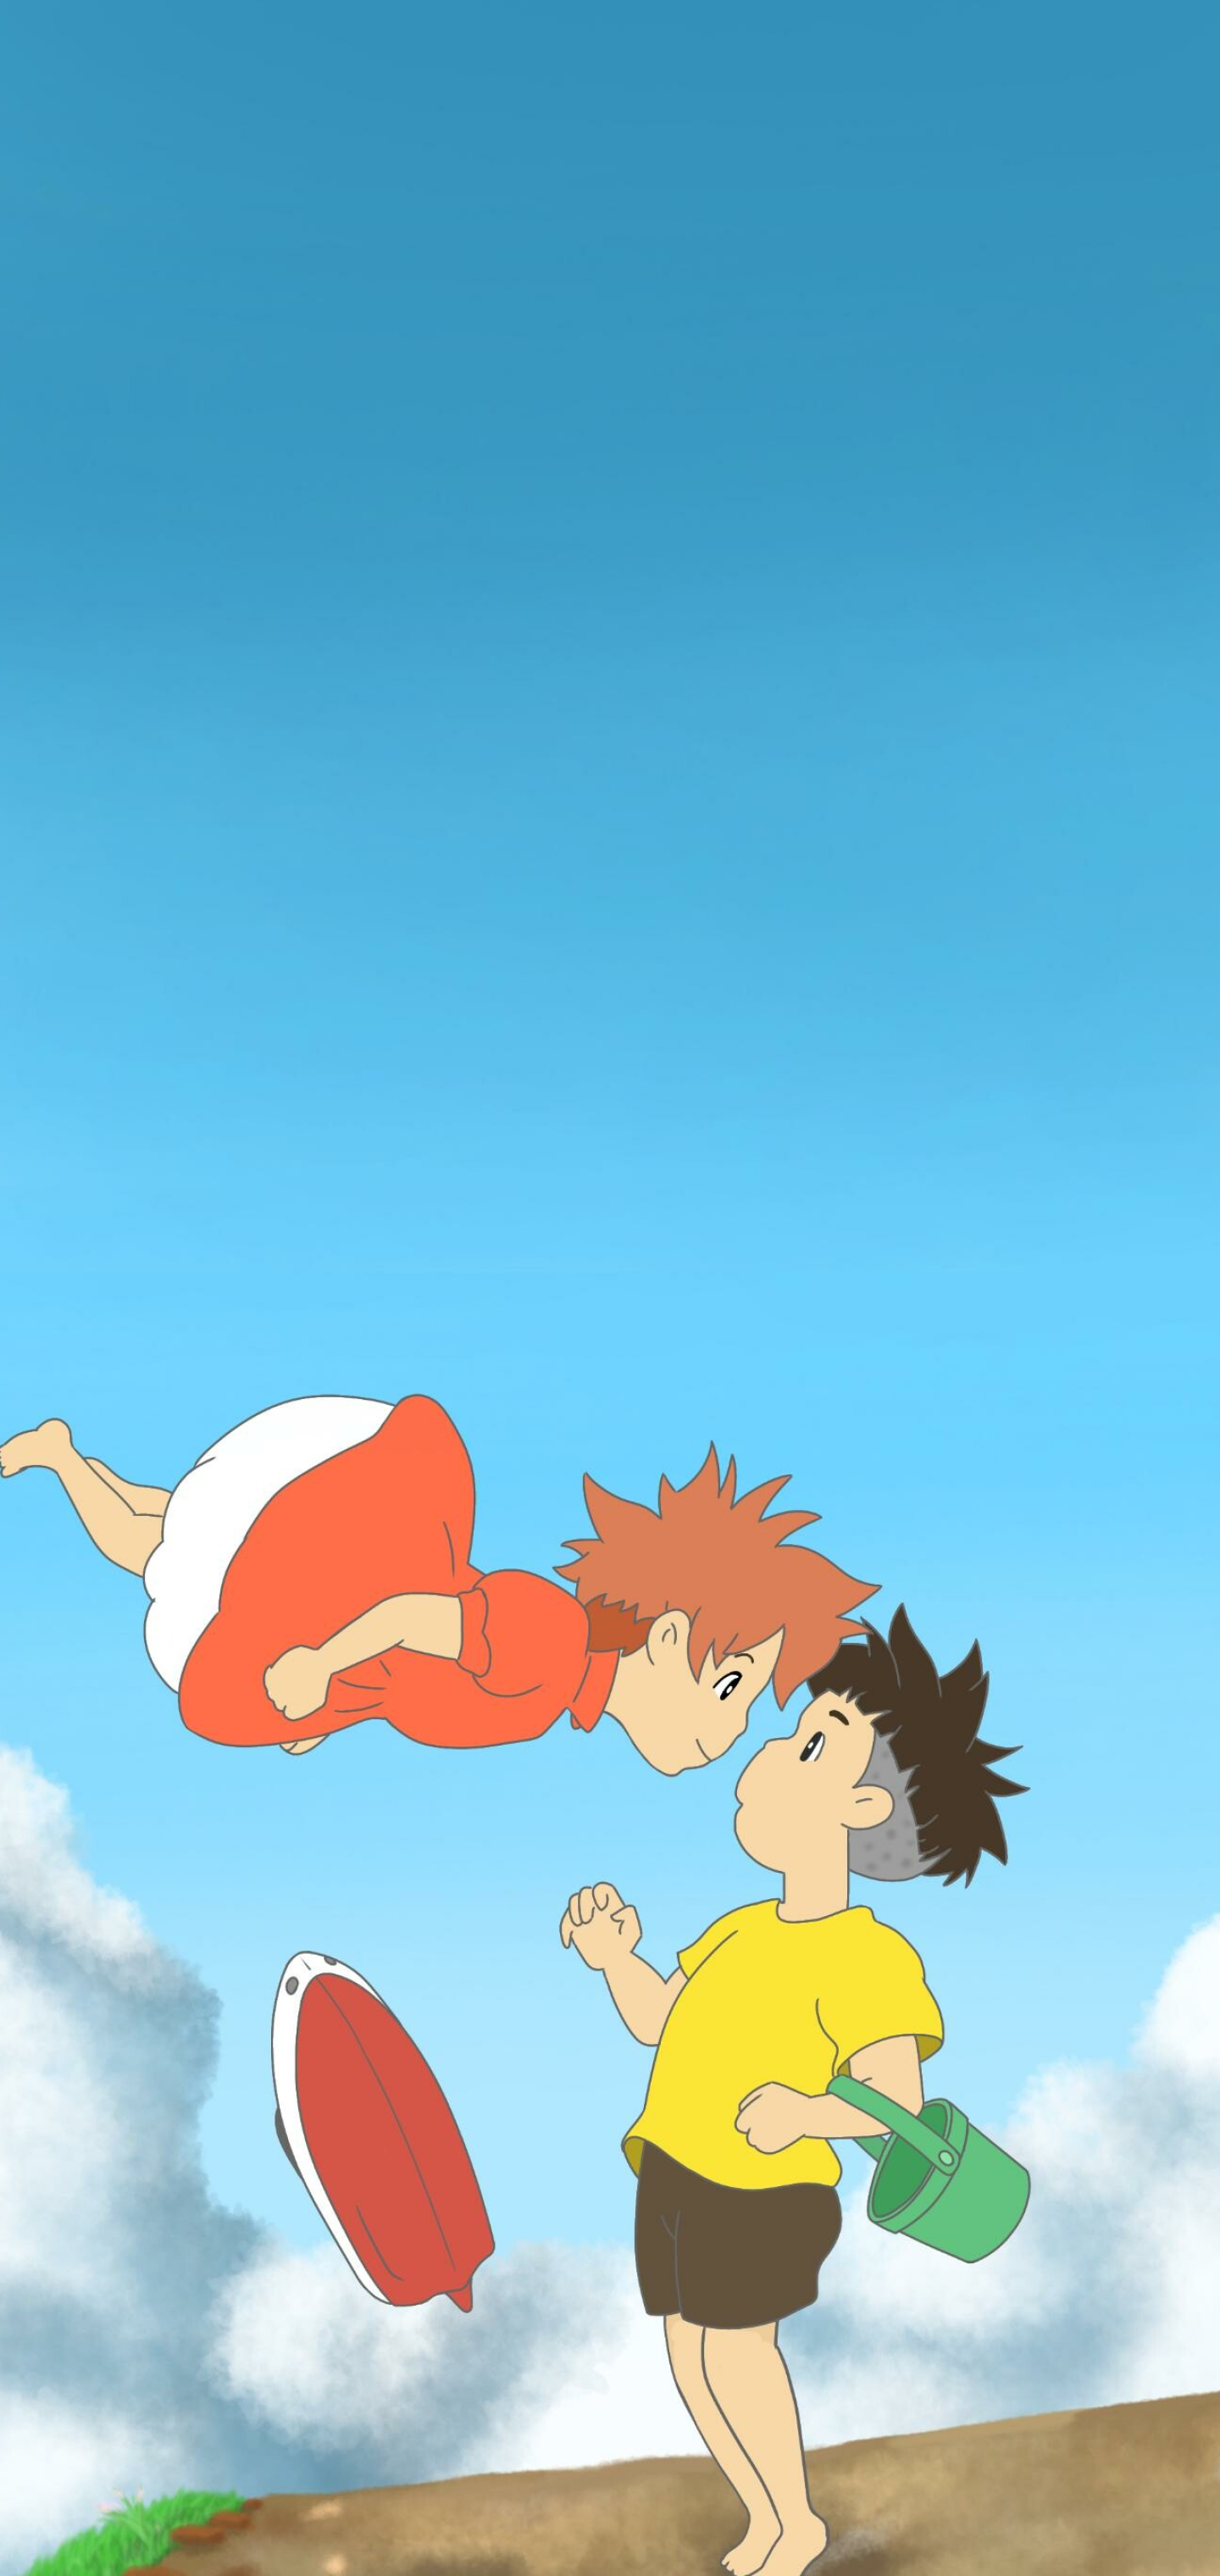 Ponyo: Animated by Studio Ghibli for the Nippon Television Network, Dentsu, Hakuhodo DY Media Partners, Buena Vista Home Entertainment, Mitsubishi, Distributed by Toho. 1440x3040 HD Wallpaper.